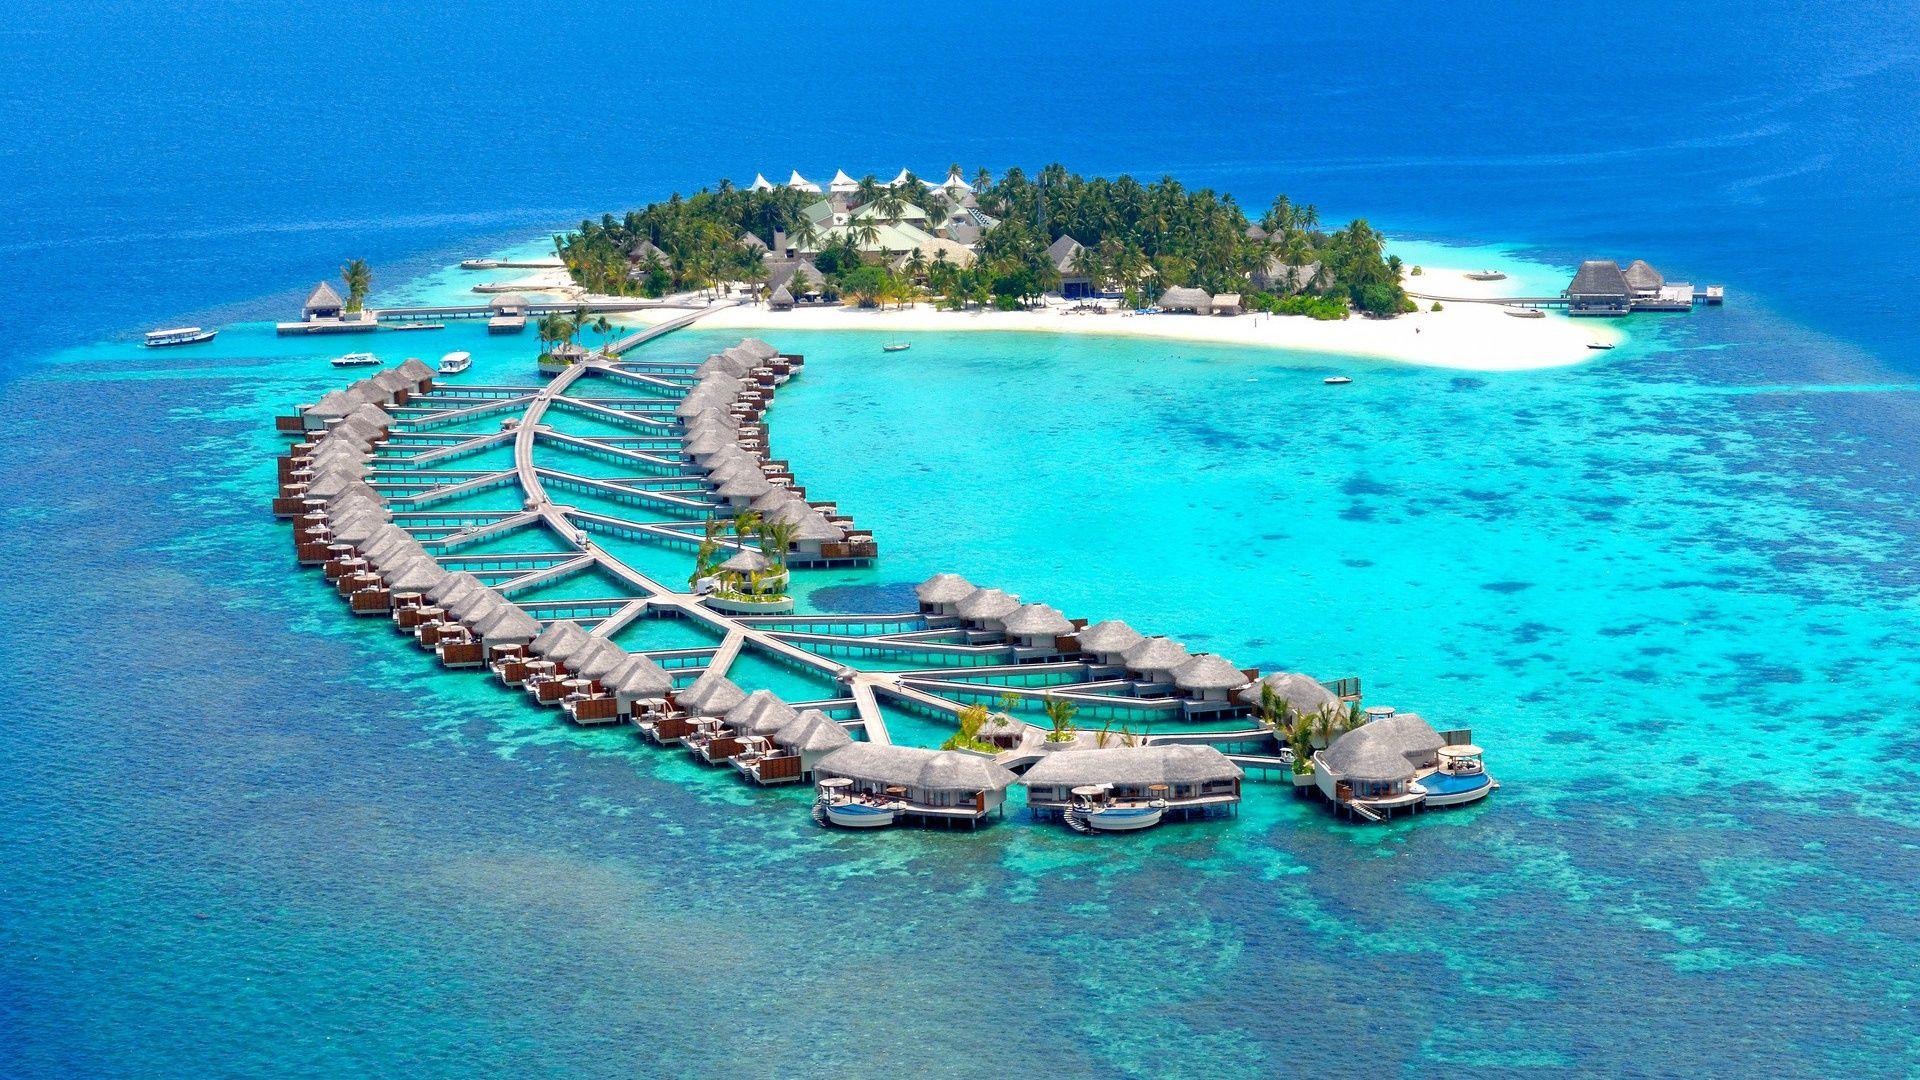 Beautiful Maldives Island Wallpaper Background. Places I'd like to